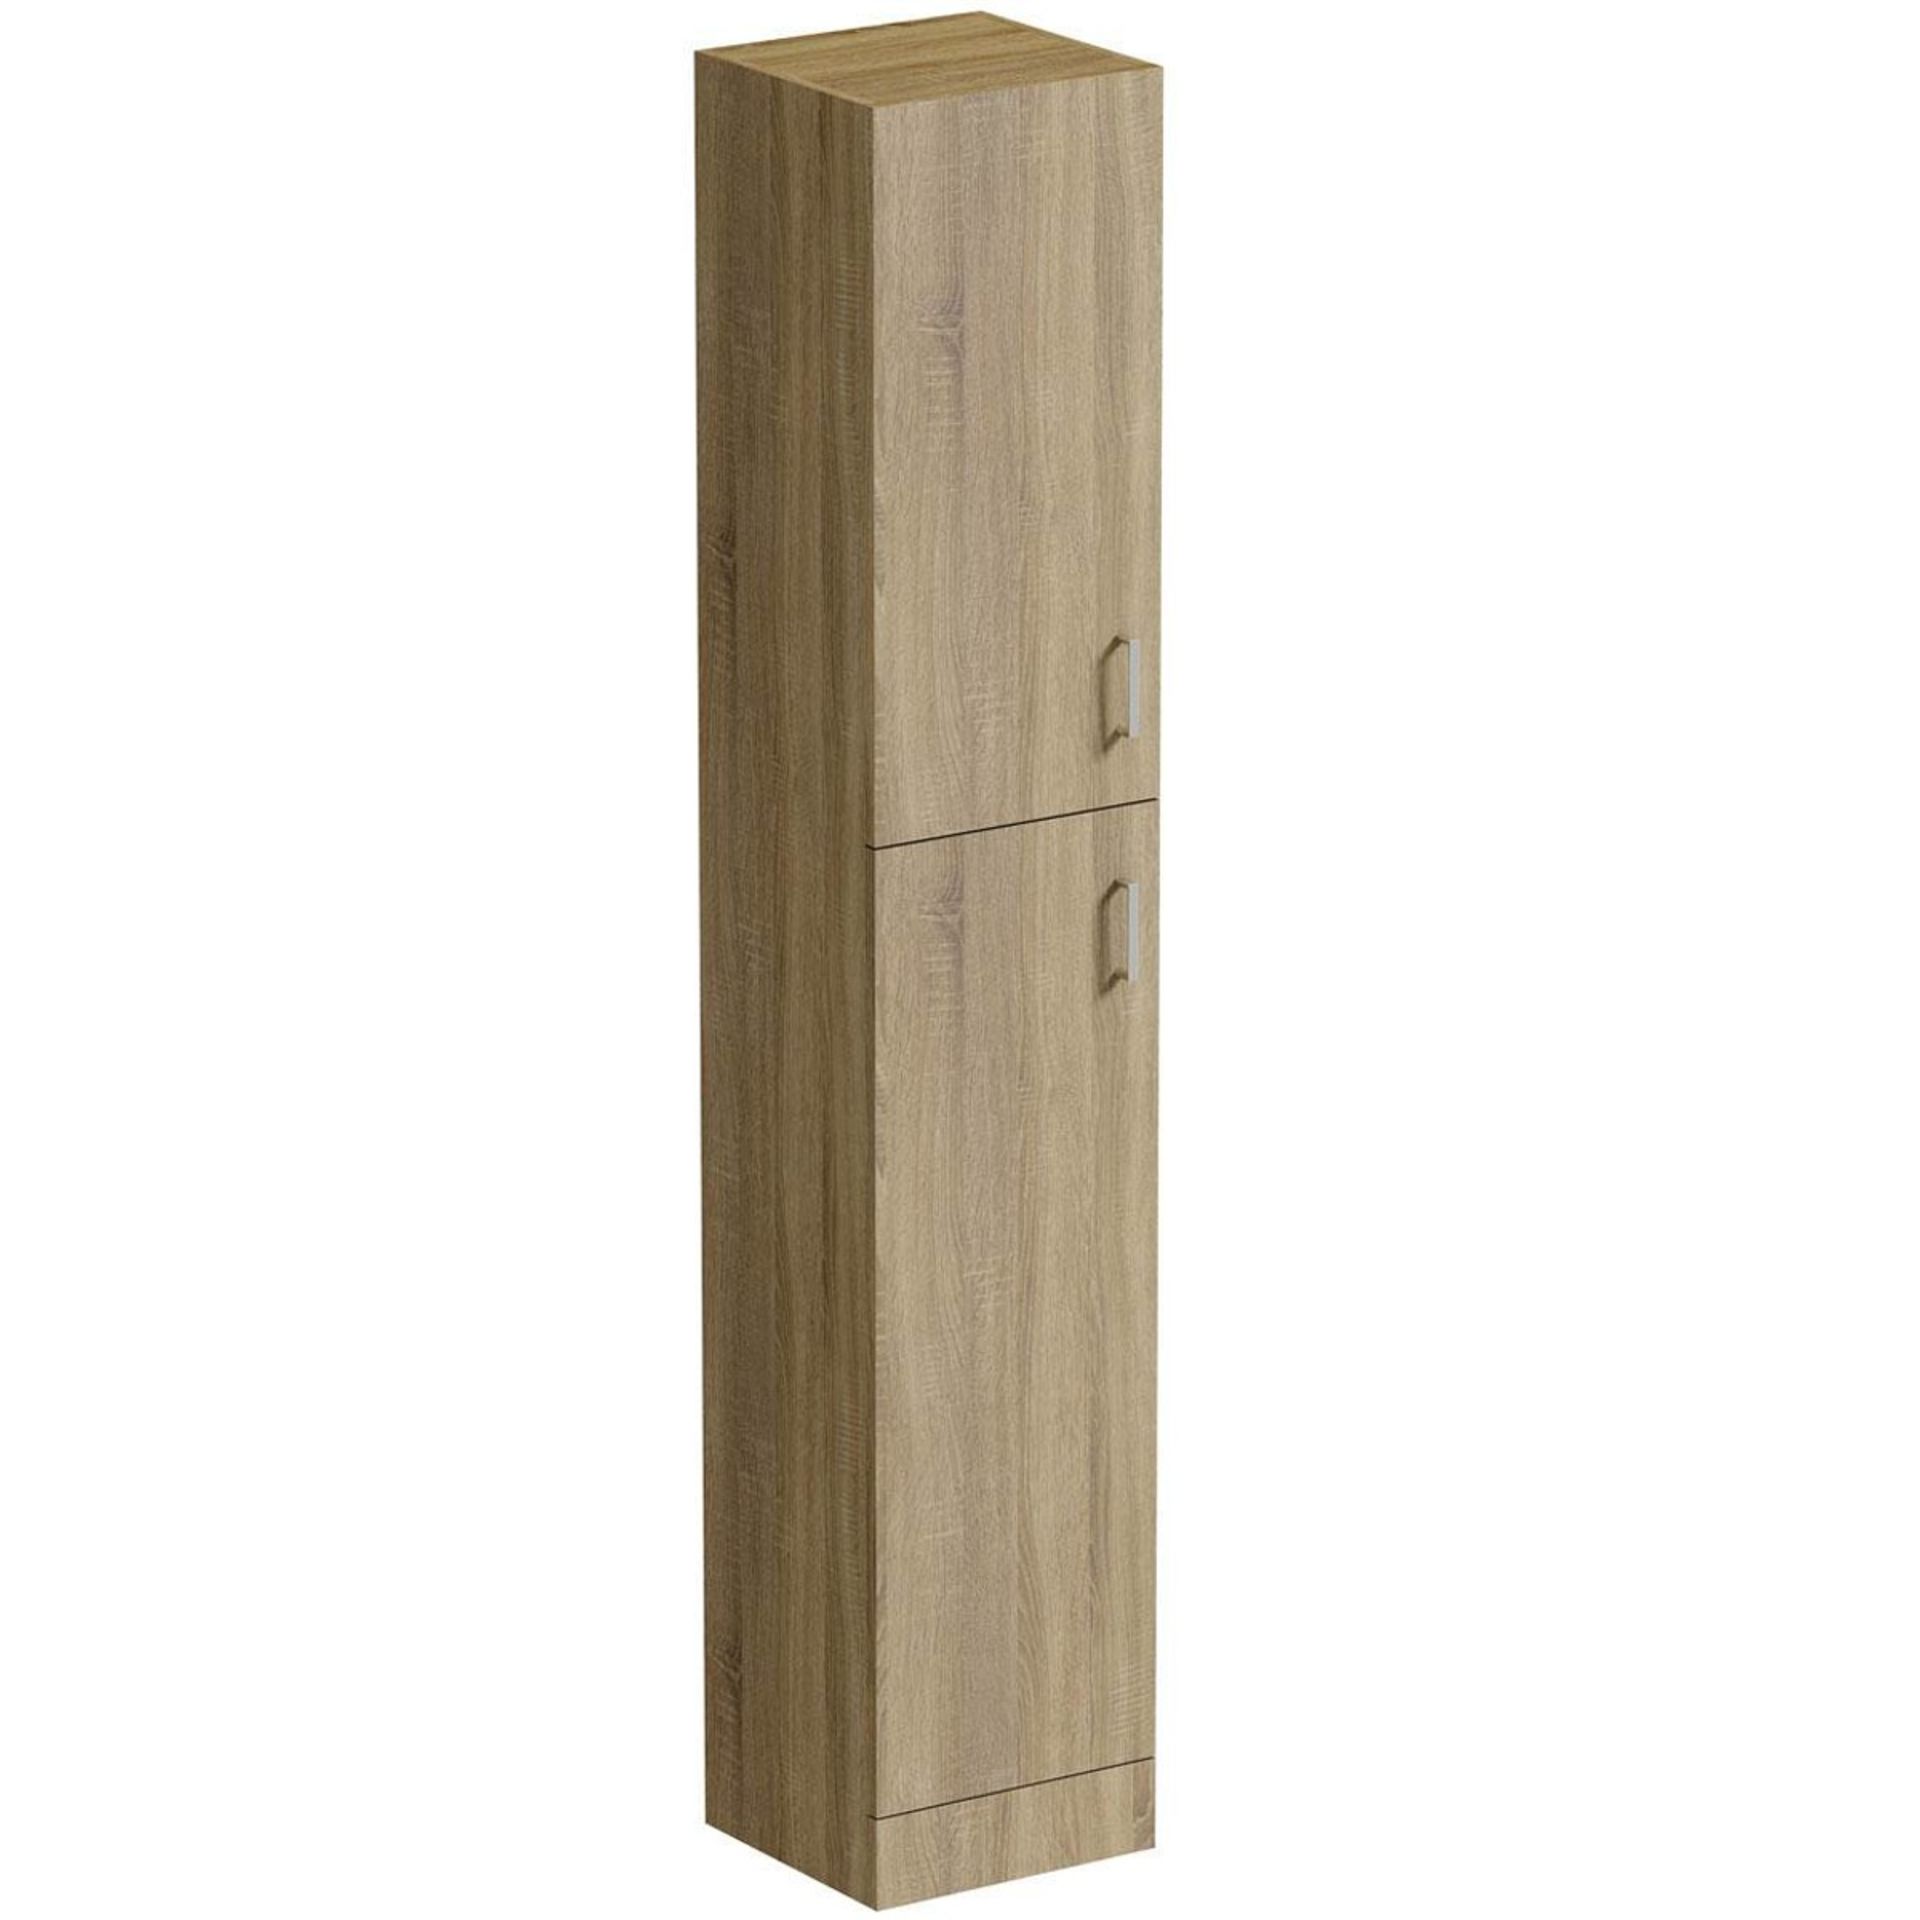 1 x Sienna Oak 300mm Tall Bathroom Storage Unit - Unused Stock - CL190 - Ref BR064 - Location: - Image 5 of 5